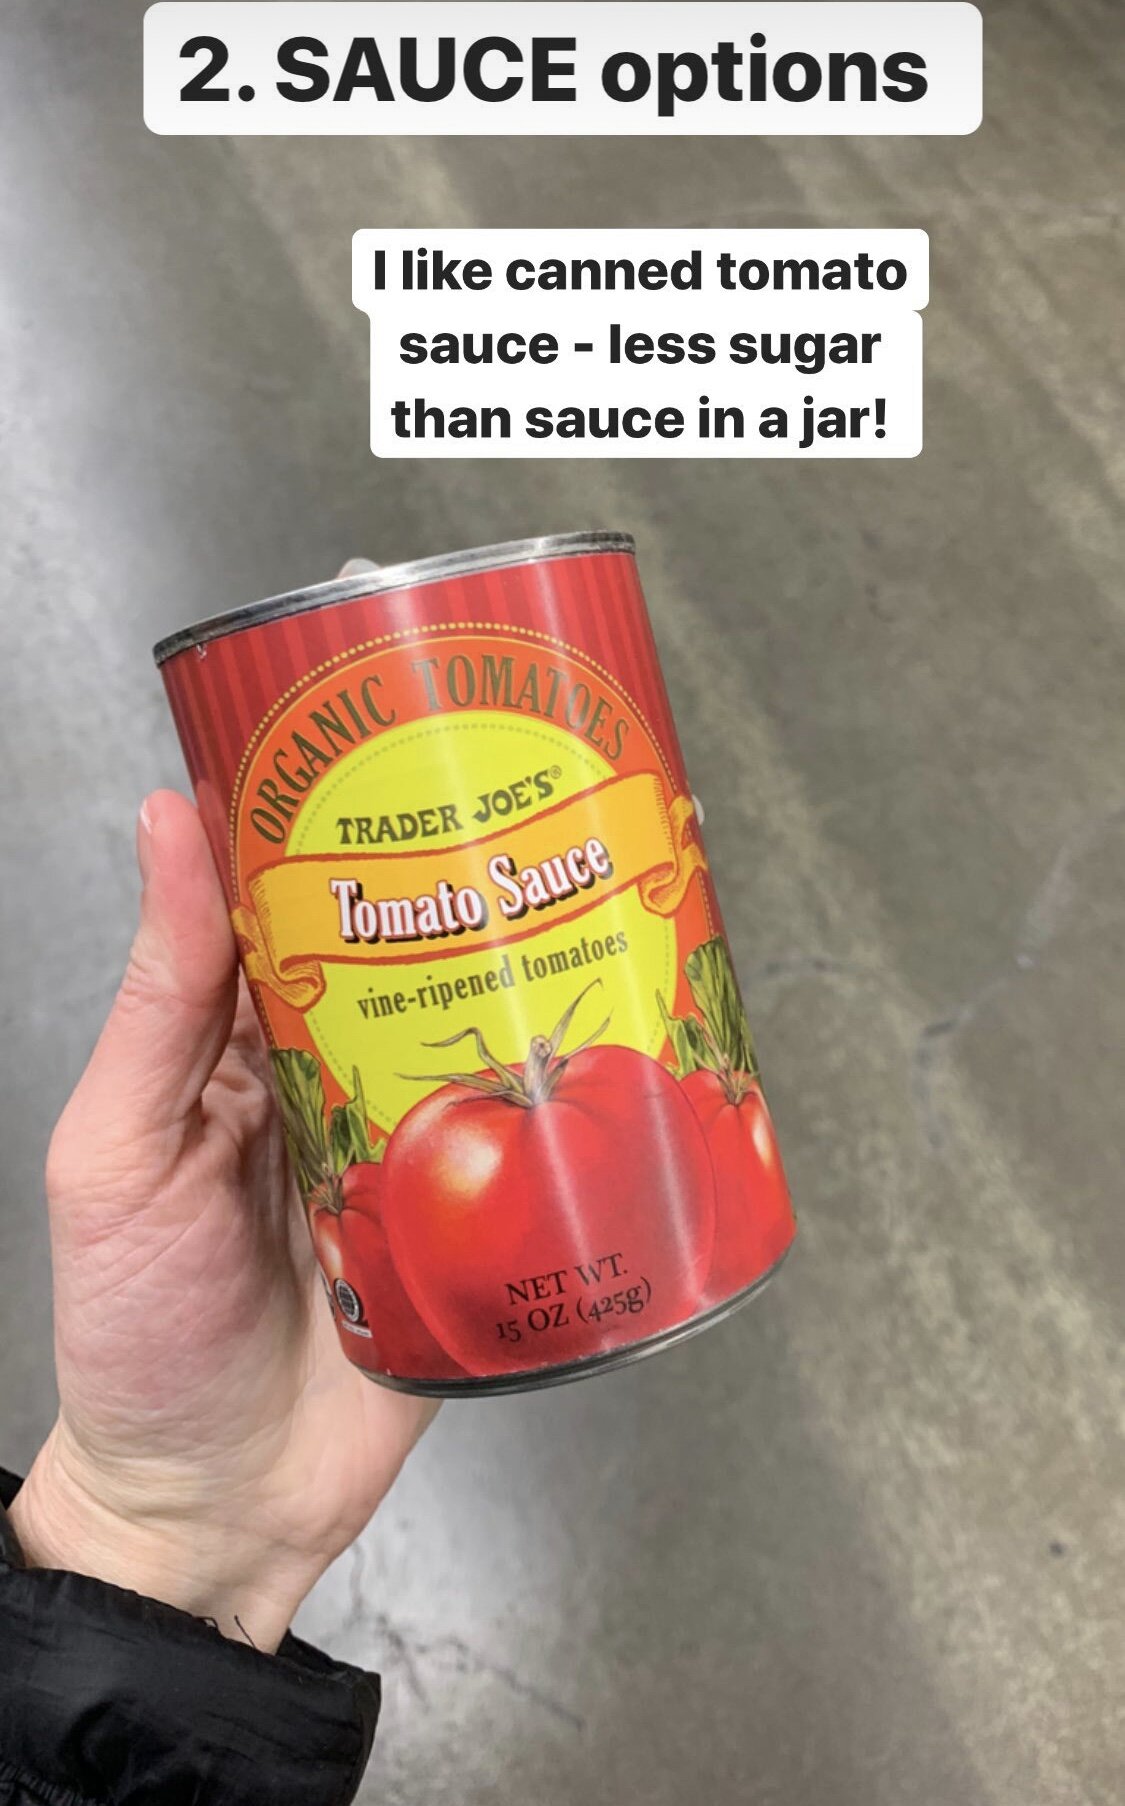 Trader Joe's sauces